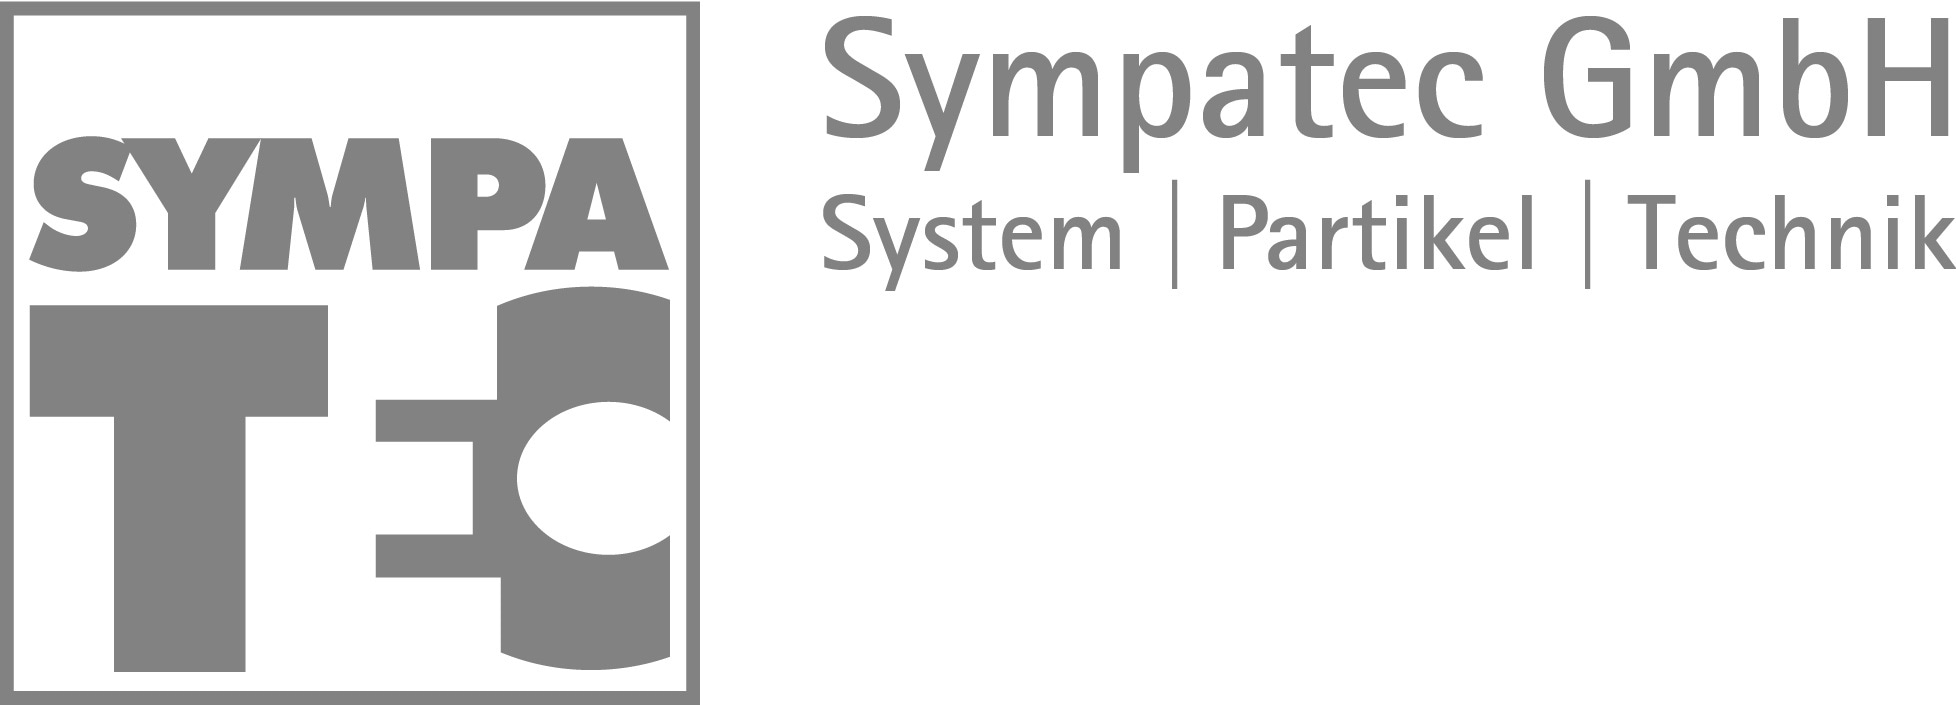 Sympatec GmbH logo.